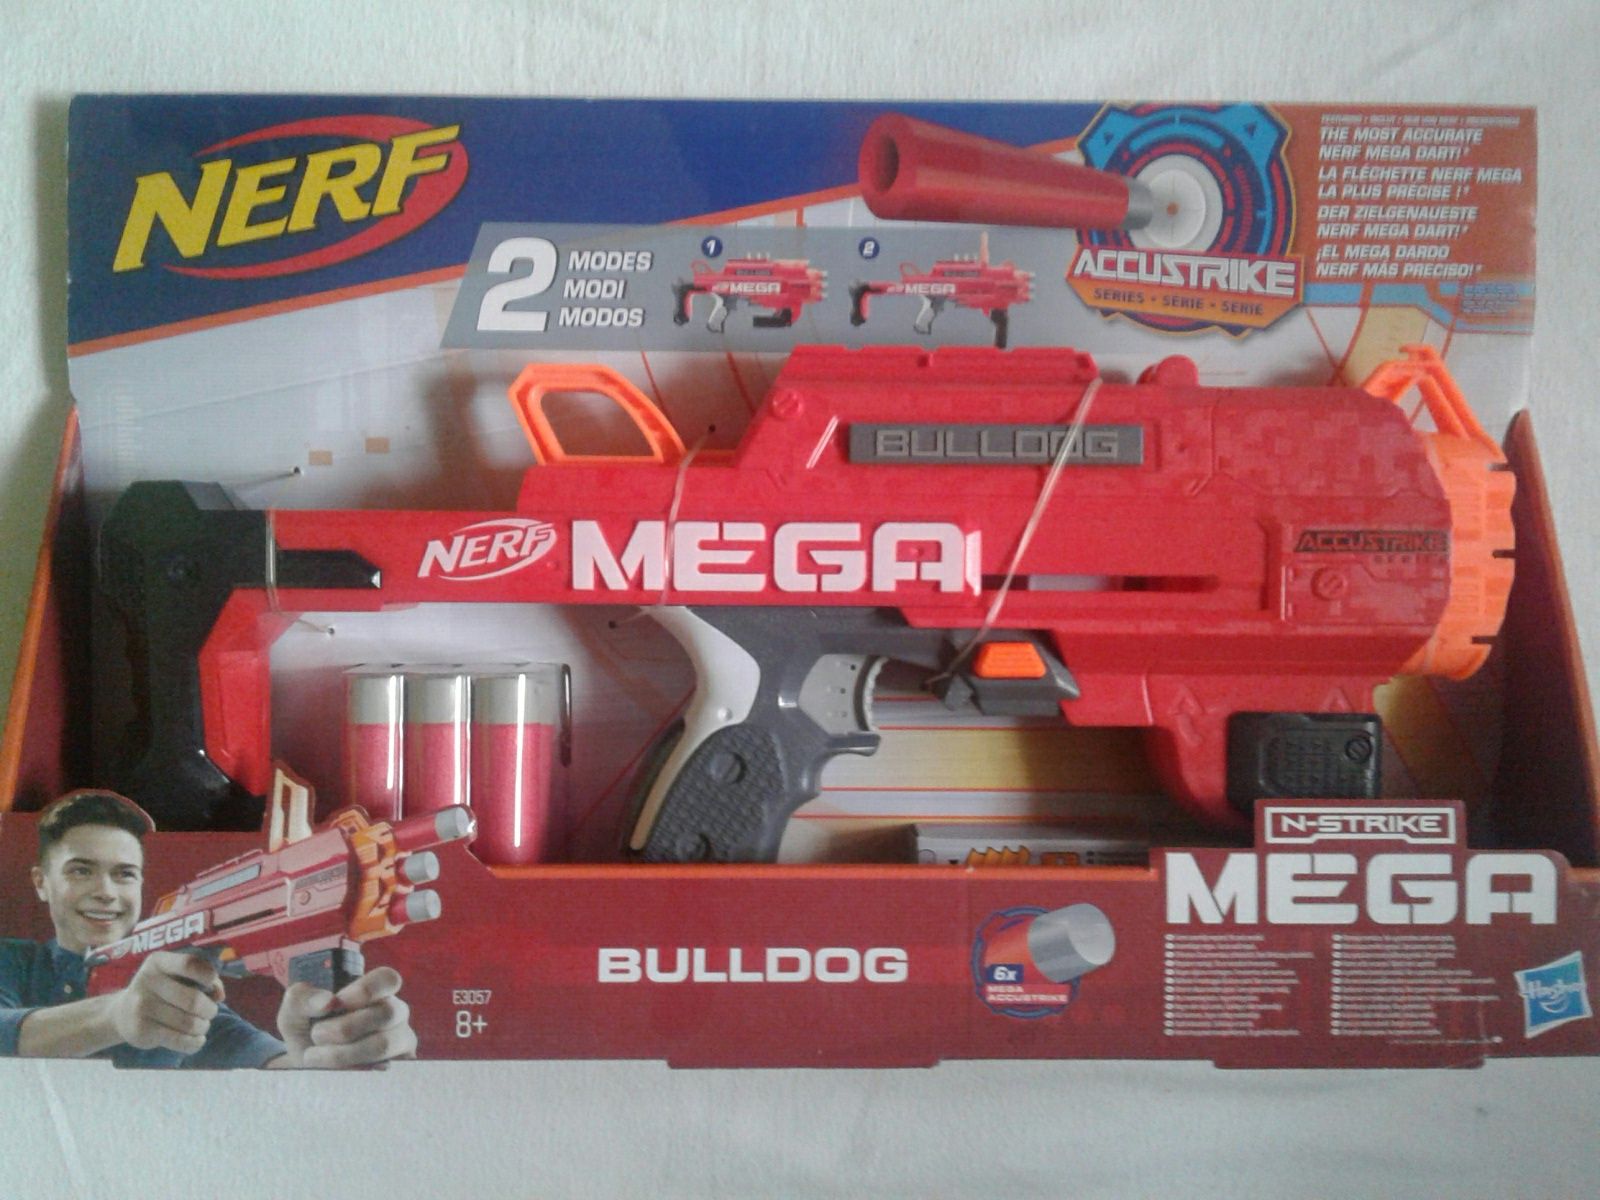 Arma joaca Nerf Bulldog cu 6 proiectile buretoase Mega, noua, sigilat